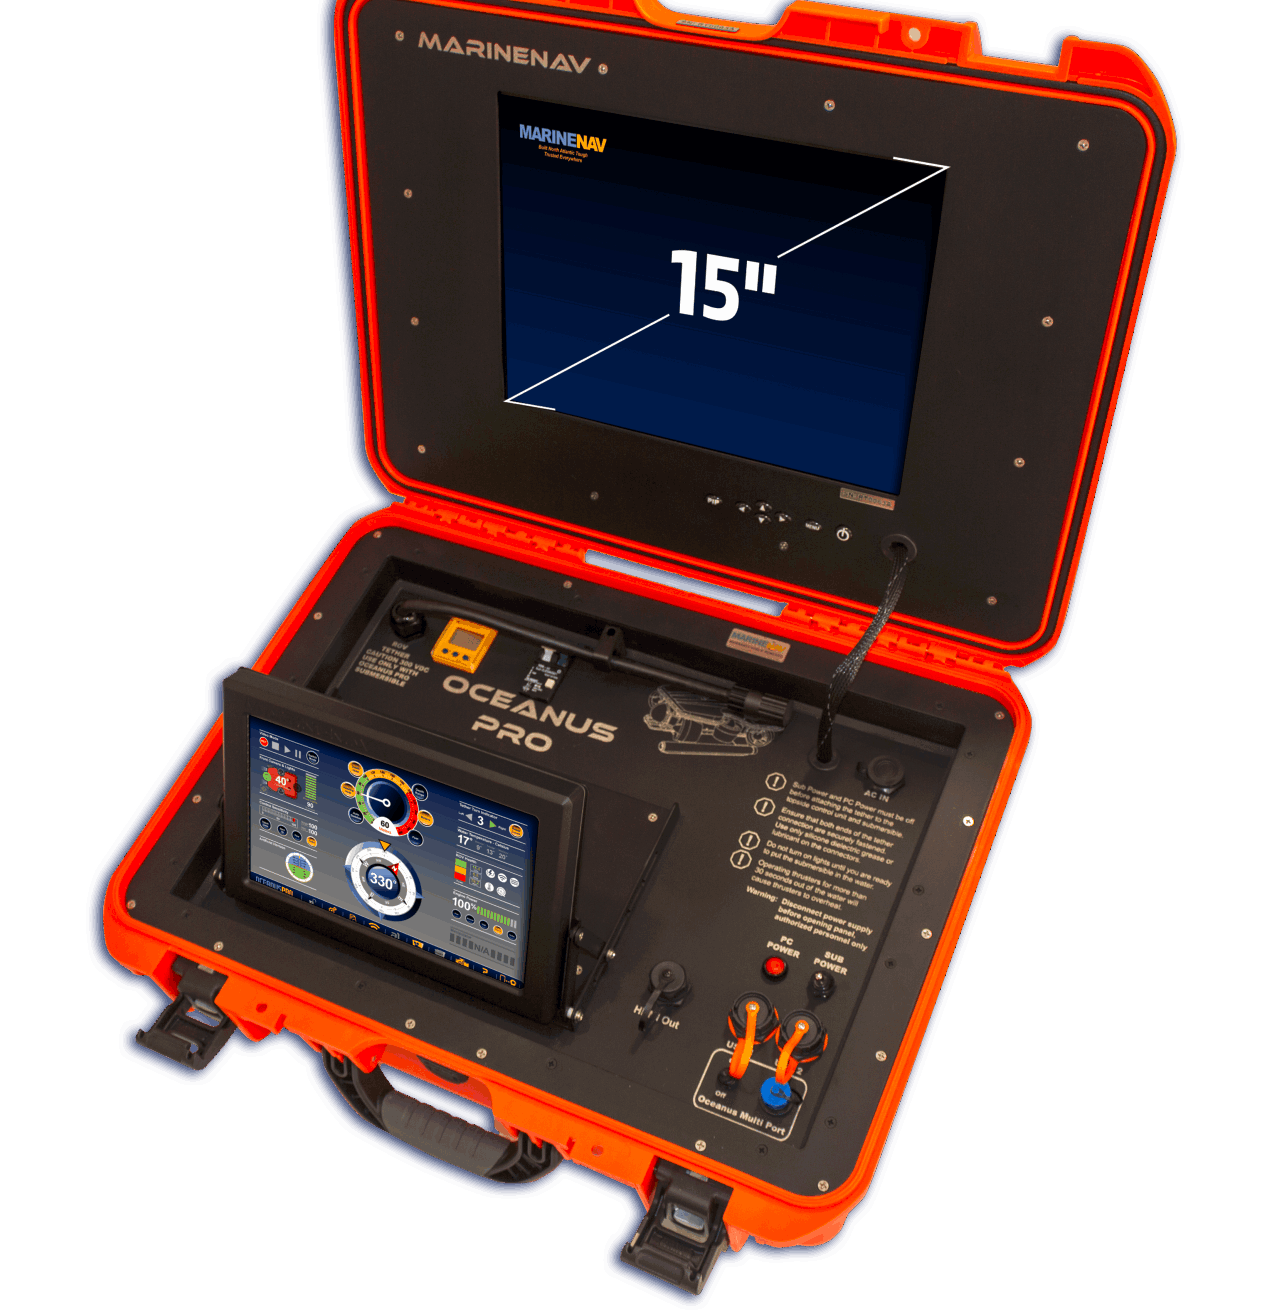 Oceanus Pro ROV 15" topside control case